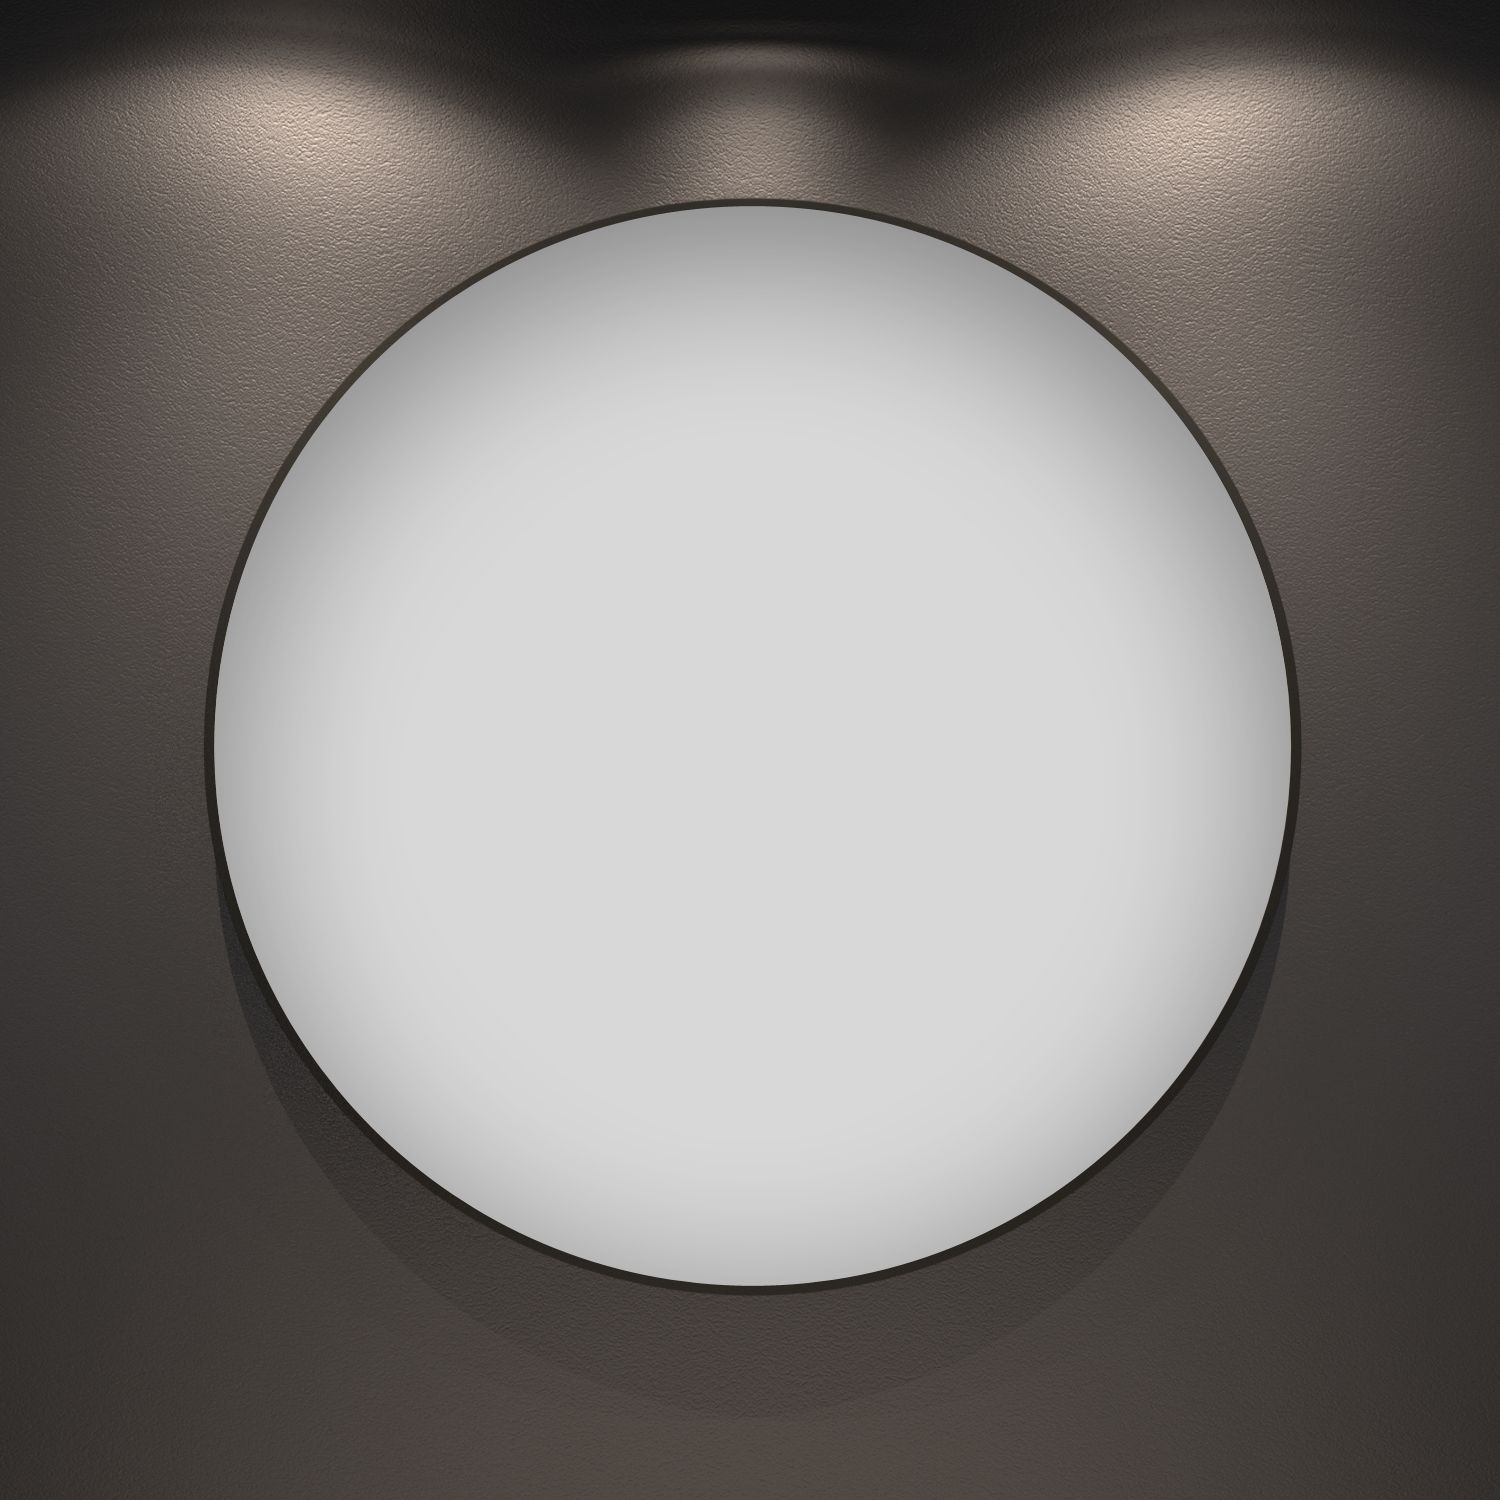 Влагостойкое круглое зеркало Wellsee 7 Rays' Spectrum 172201760, диаметр 95 см